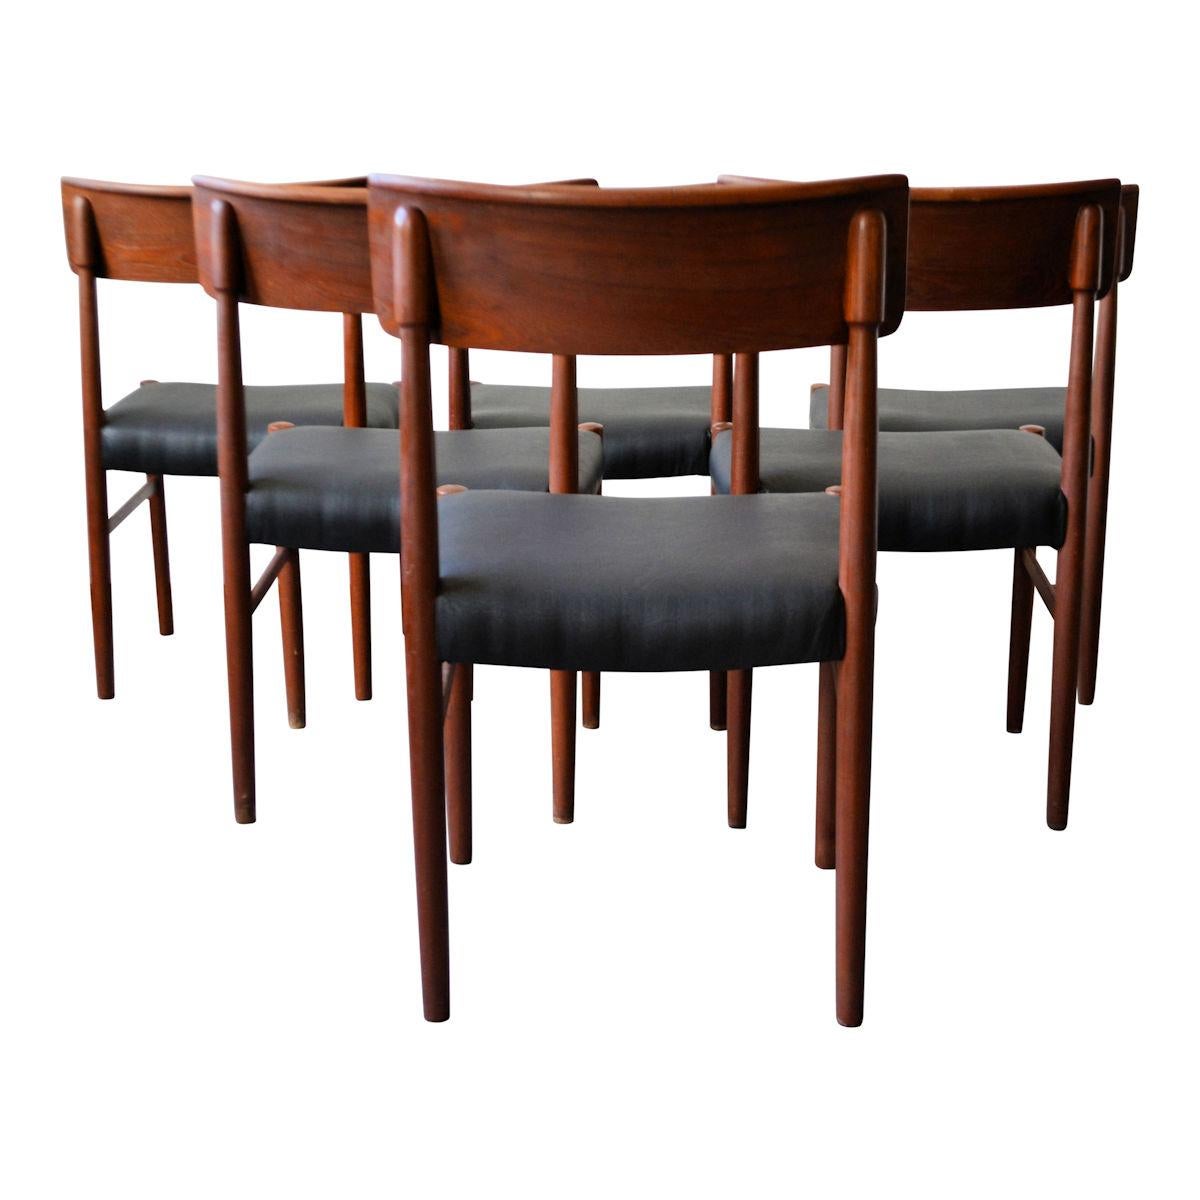 Mid-20th Century Danish Design Farstrup Teak Dining Chairs